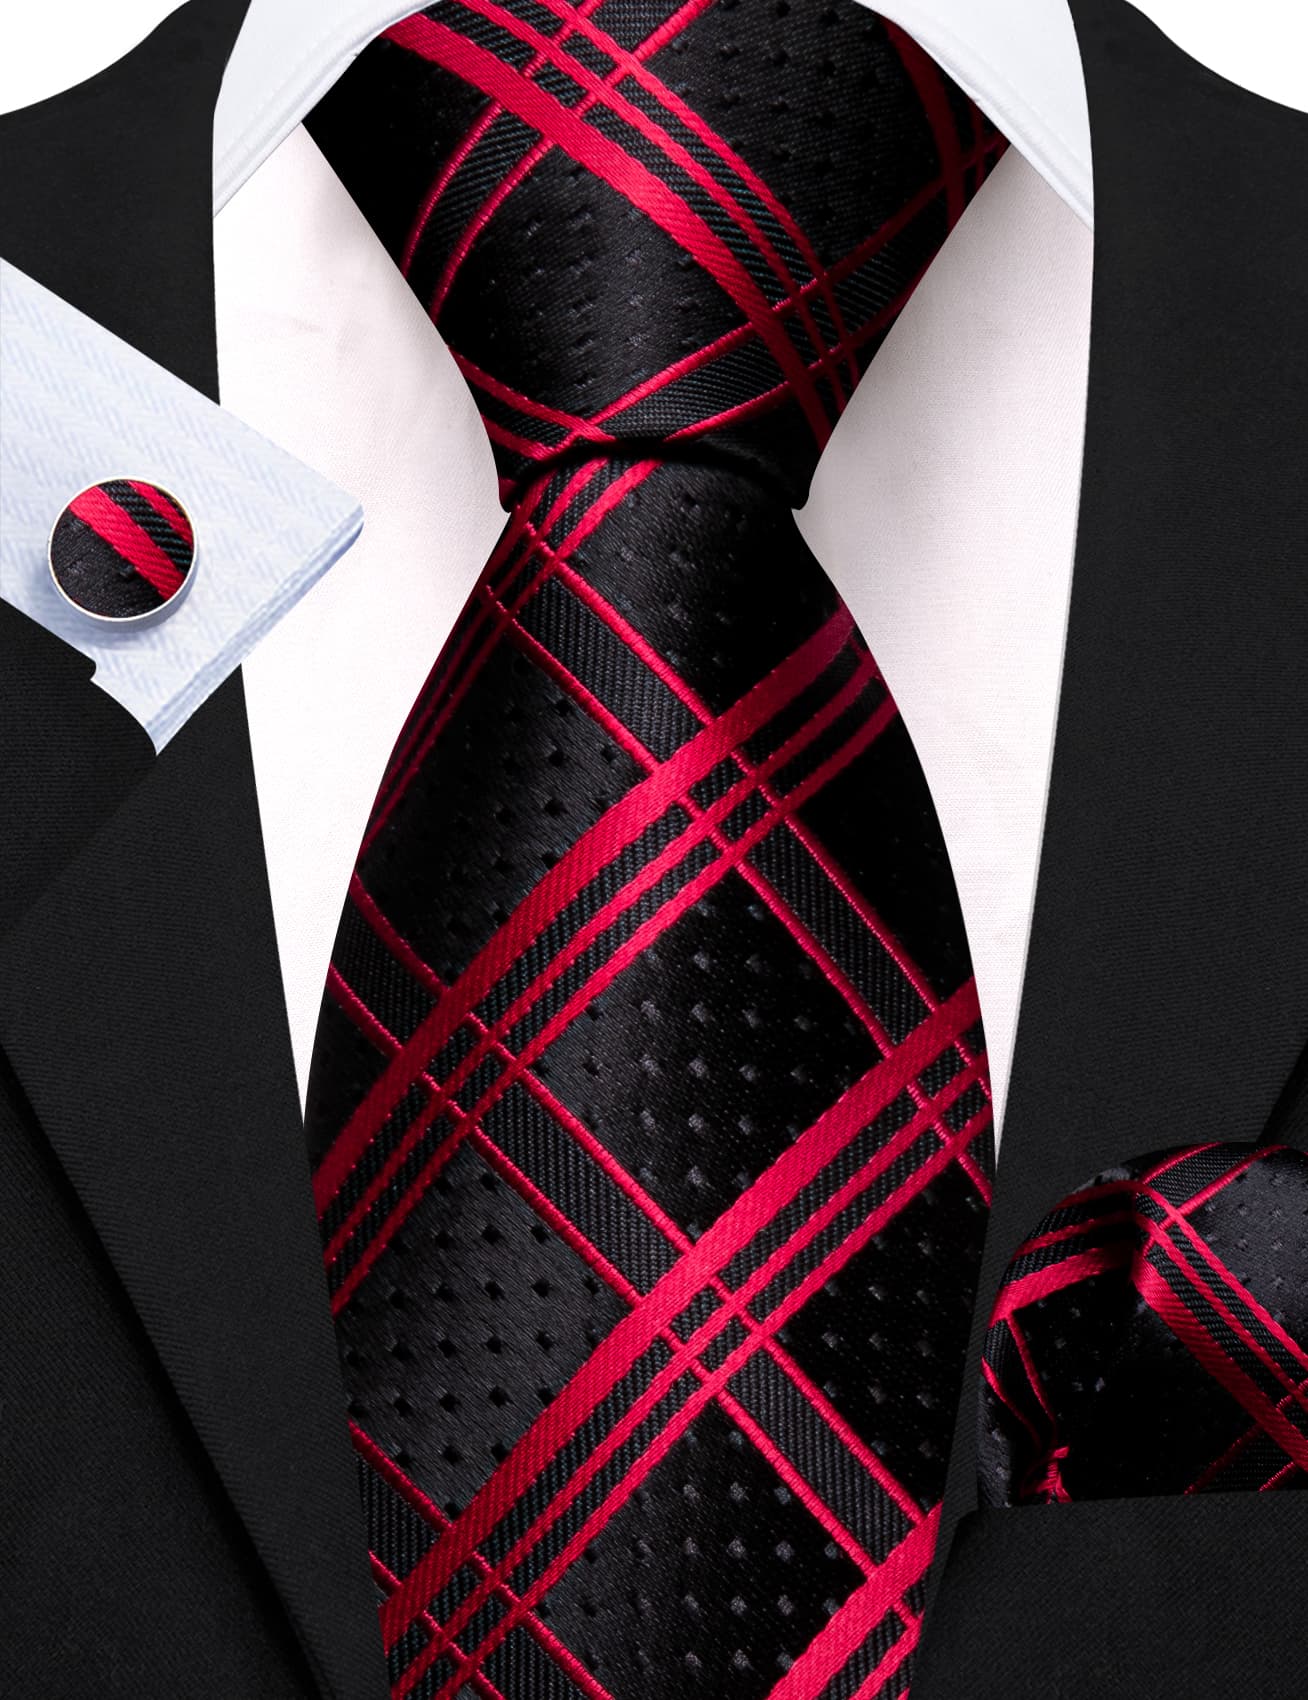  Black Tie Red Pinstripes Jacquard Men's Striped Necktie Set